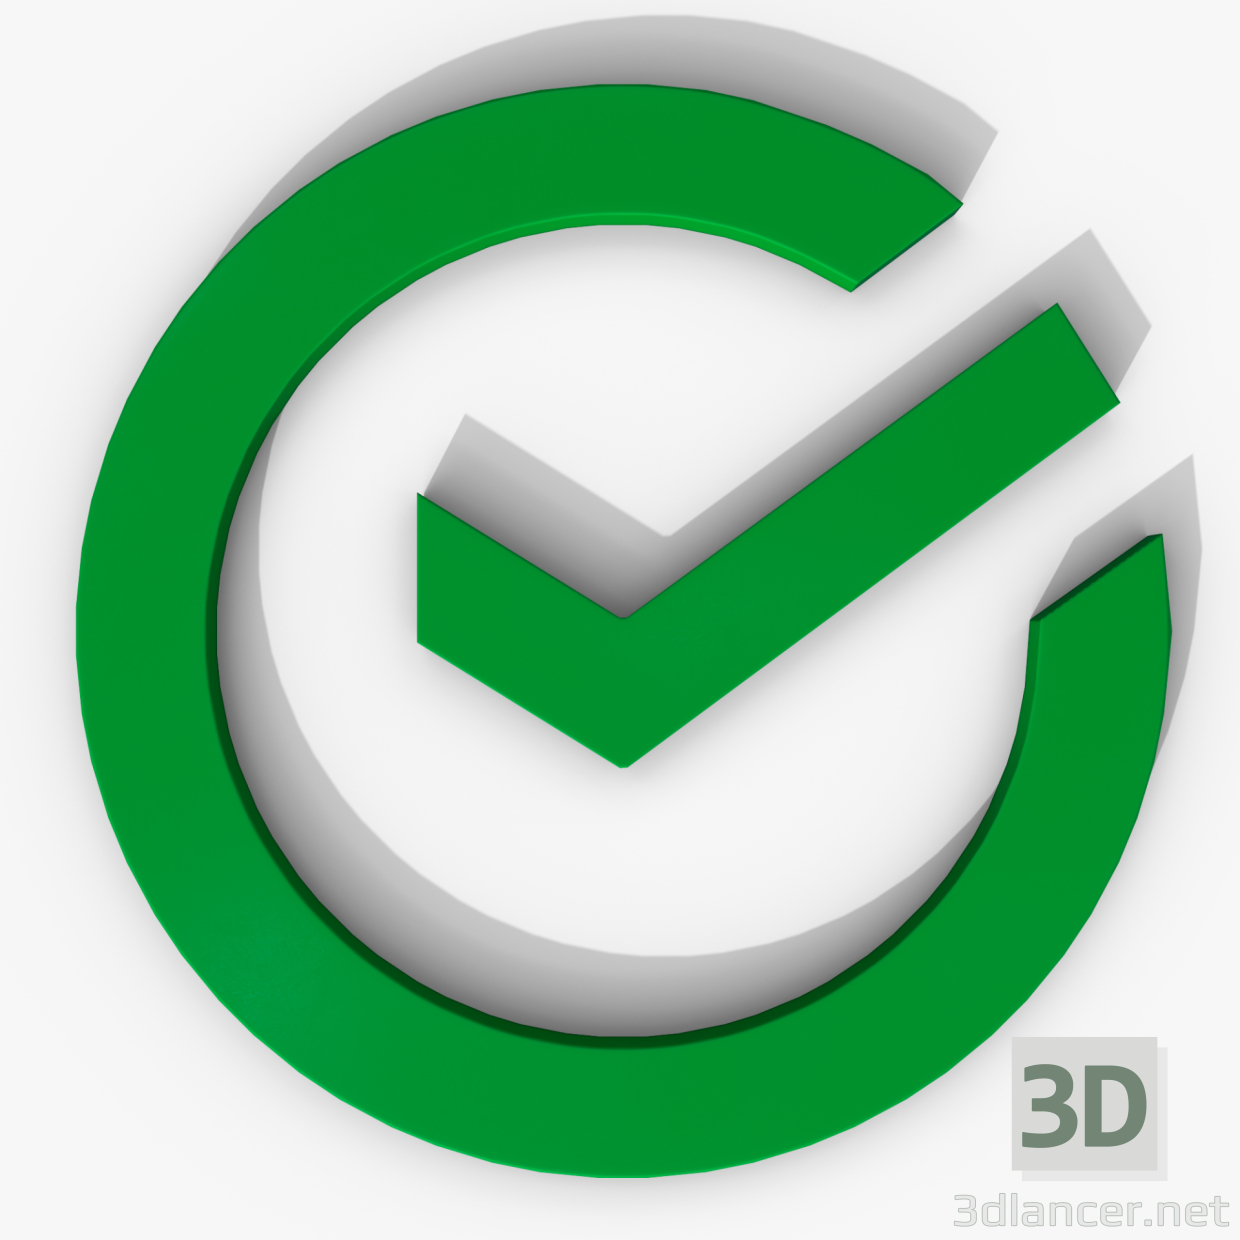 modèle 3D de Logo Sber acheter - rendu